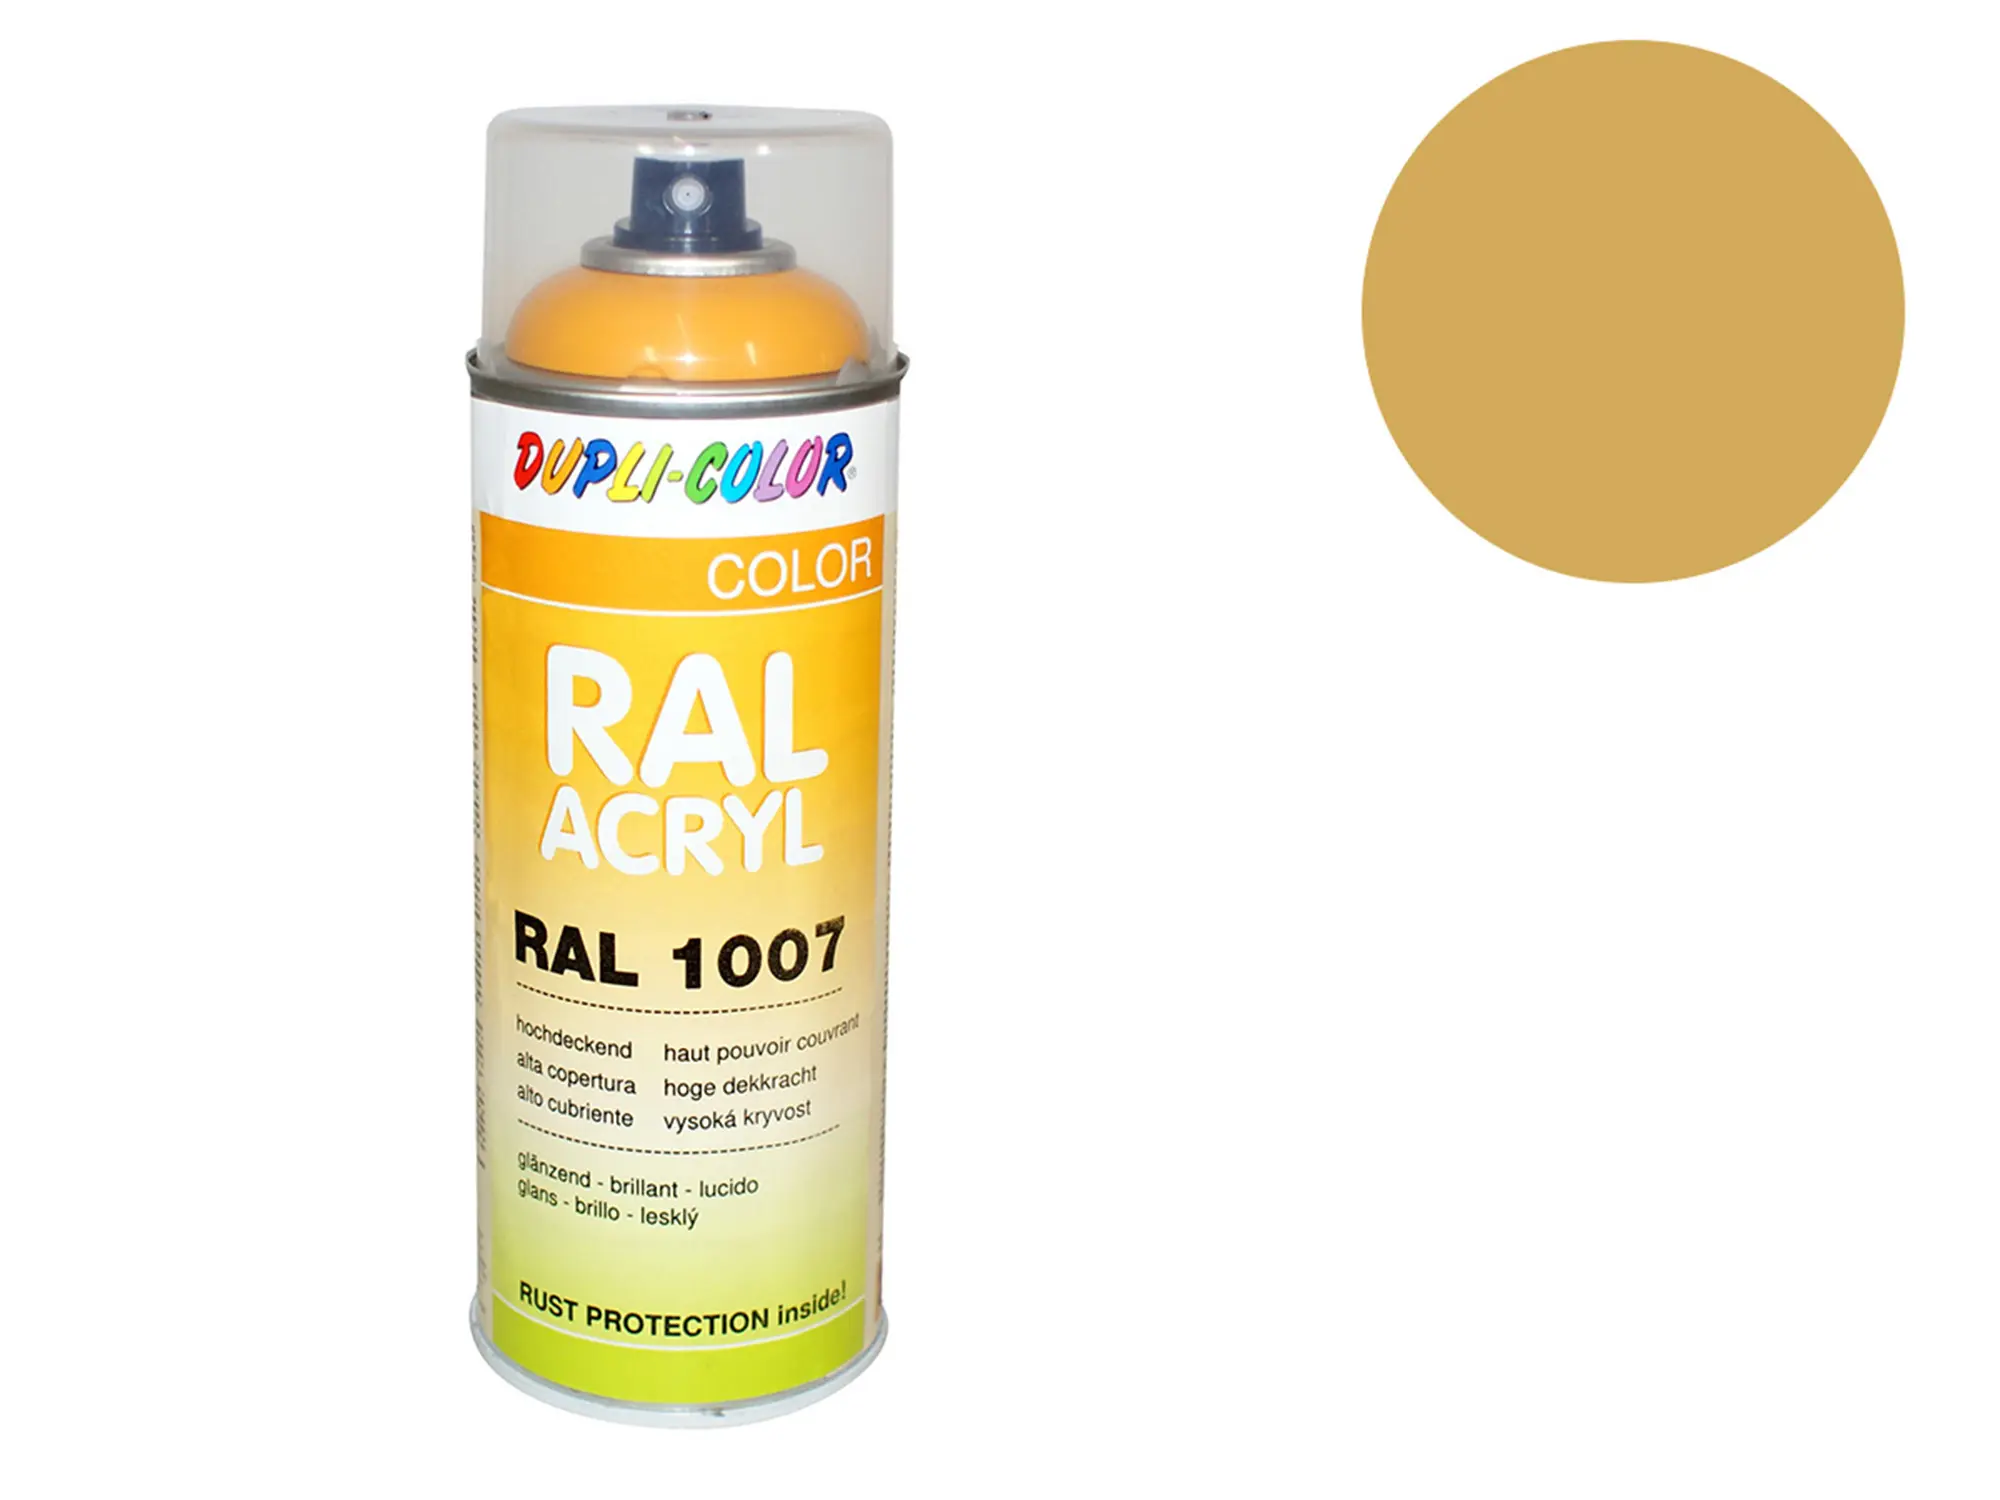 Dupli-Color Acrylic Spray RAL 1001 beige, glossy - 400 ml, Item no: 10064733 - Image 1